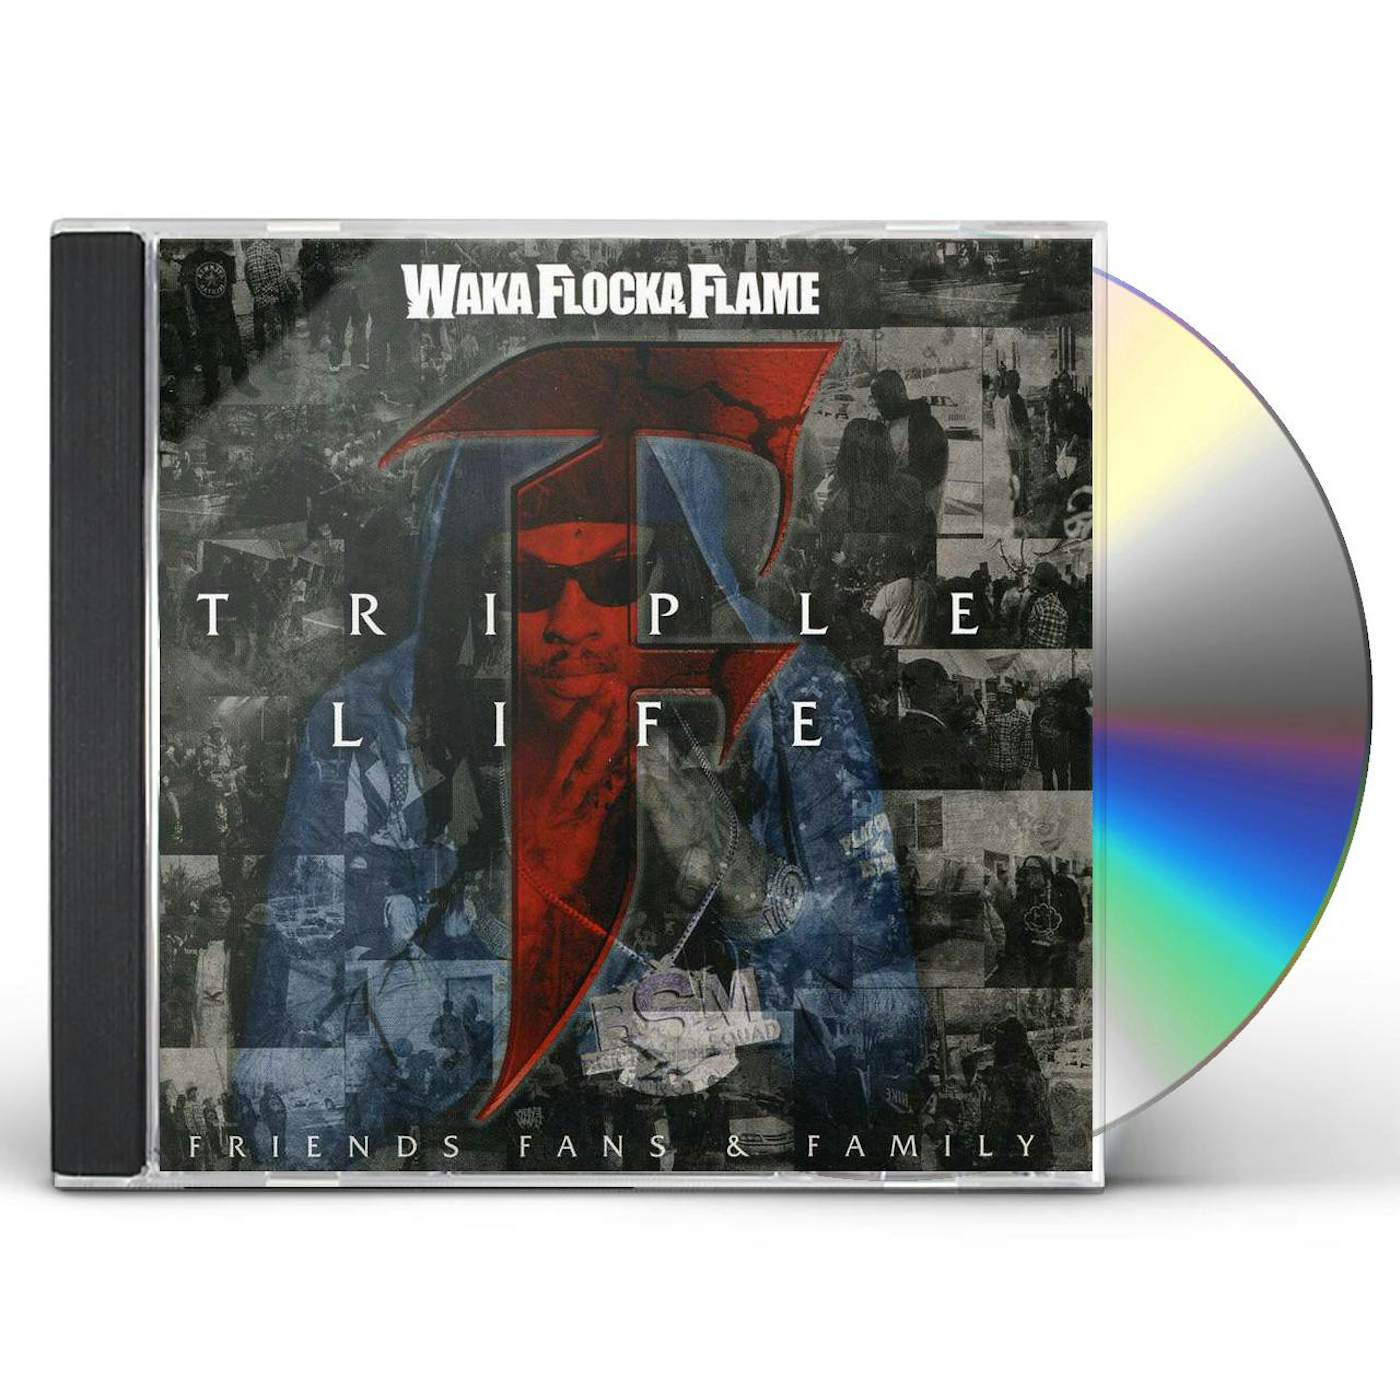 Waka Flocka Flame TRIPLE F LIFE: FRIENDS FANS & FAMILY CD